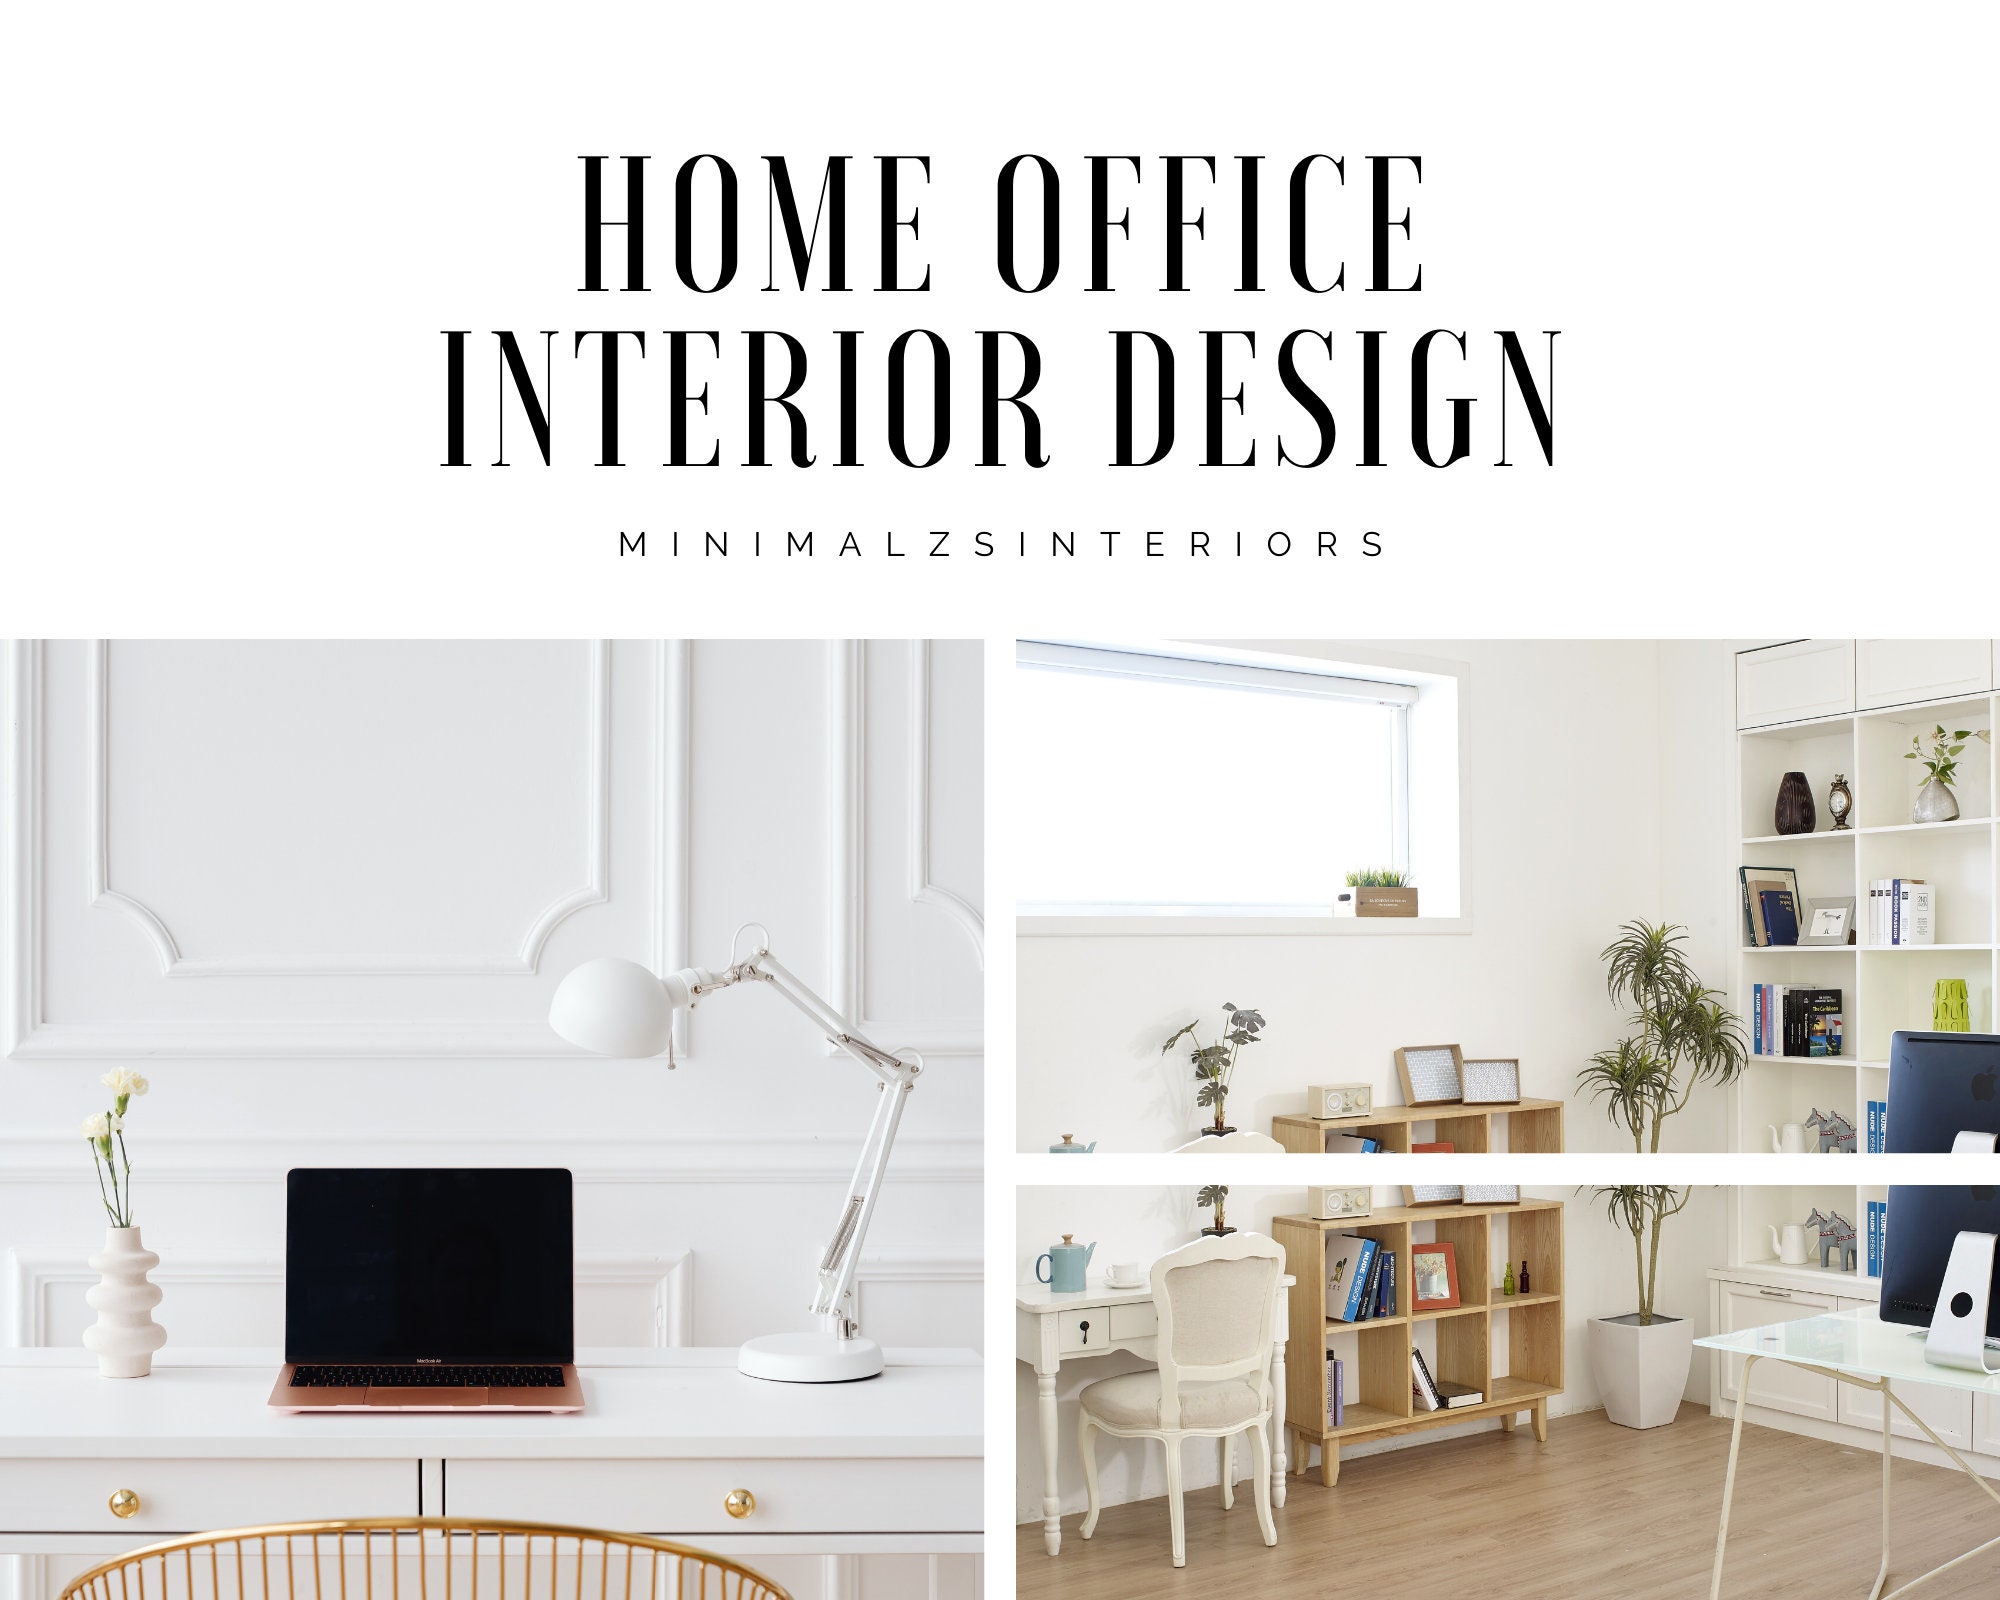 Home Office Interior Design Services Online Interior Design - Etsy